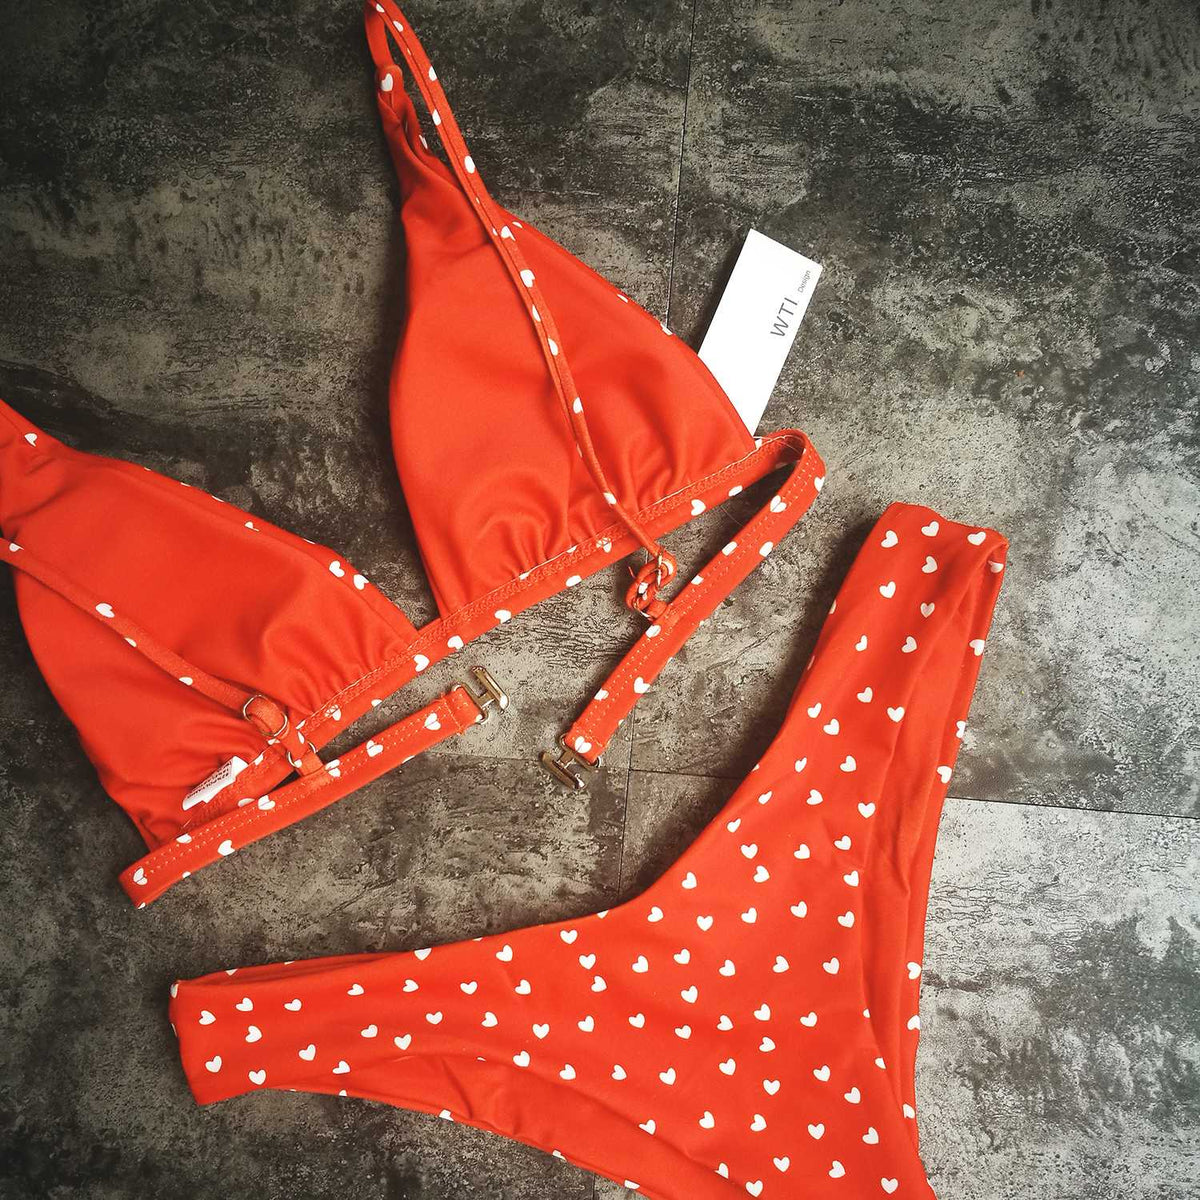 Red/Multi Heart Print Bikini Top, WHISTLES